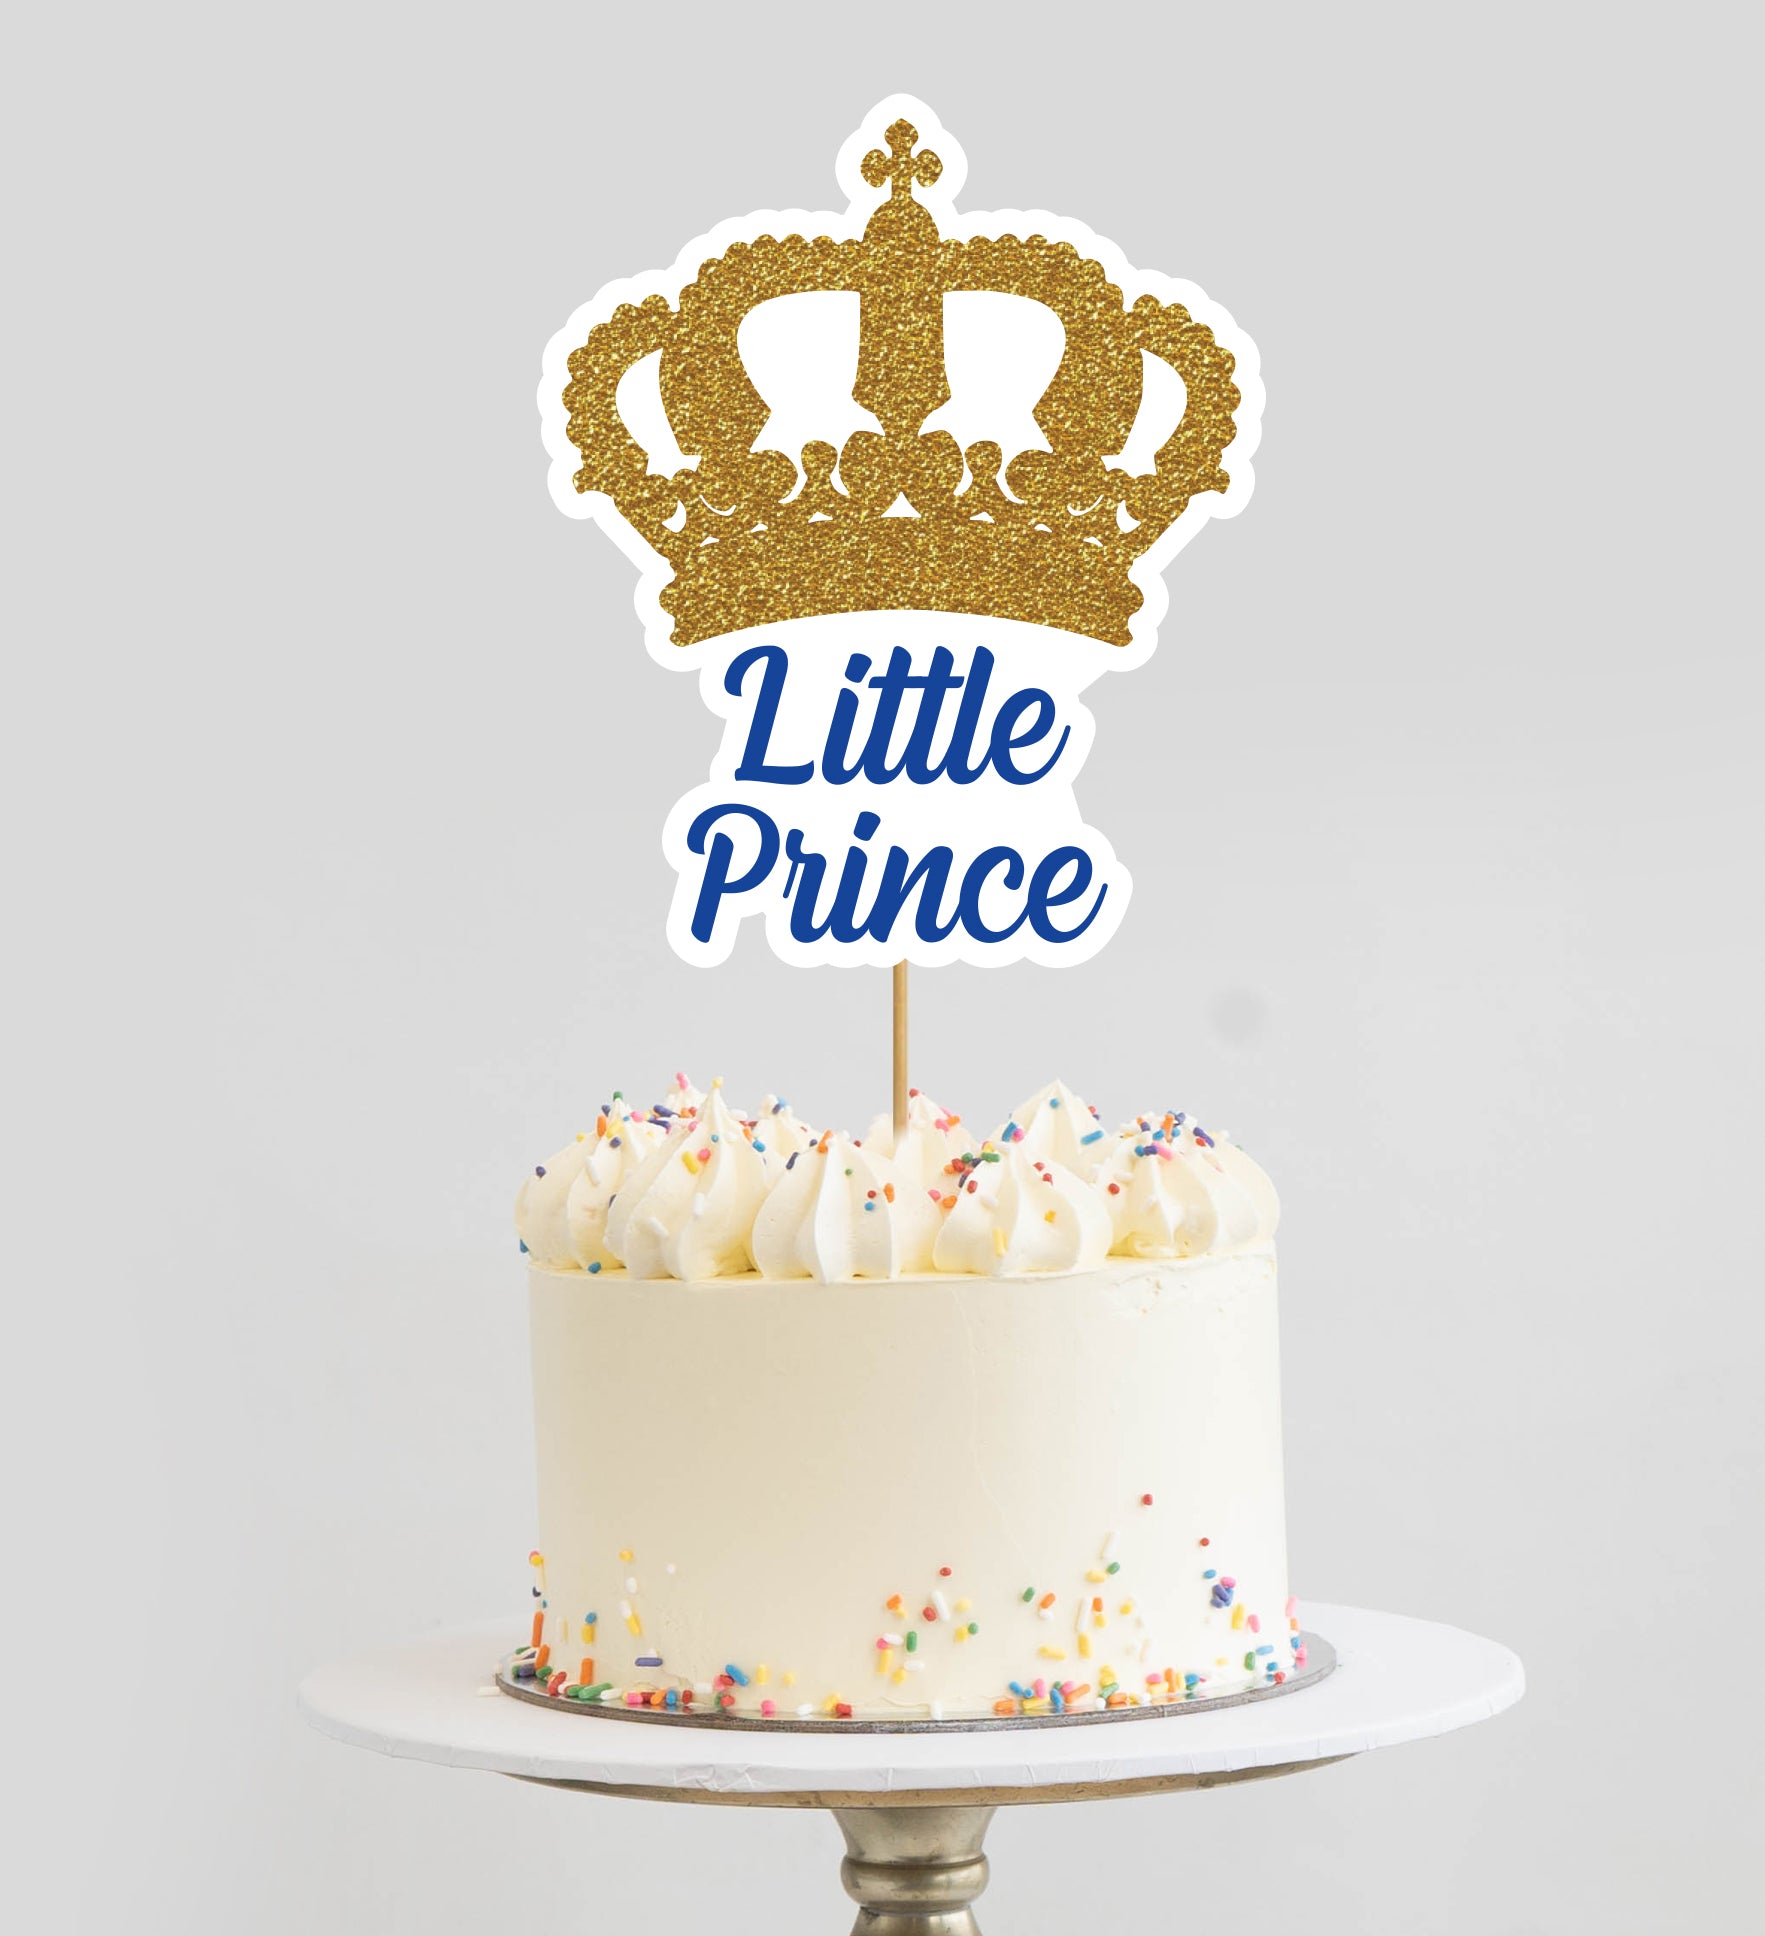 Prince Theme Cake. #freshcakes #pammal #semifondantcake #teddycakes #prince  #princess - YouTube